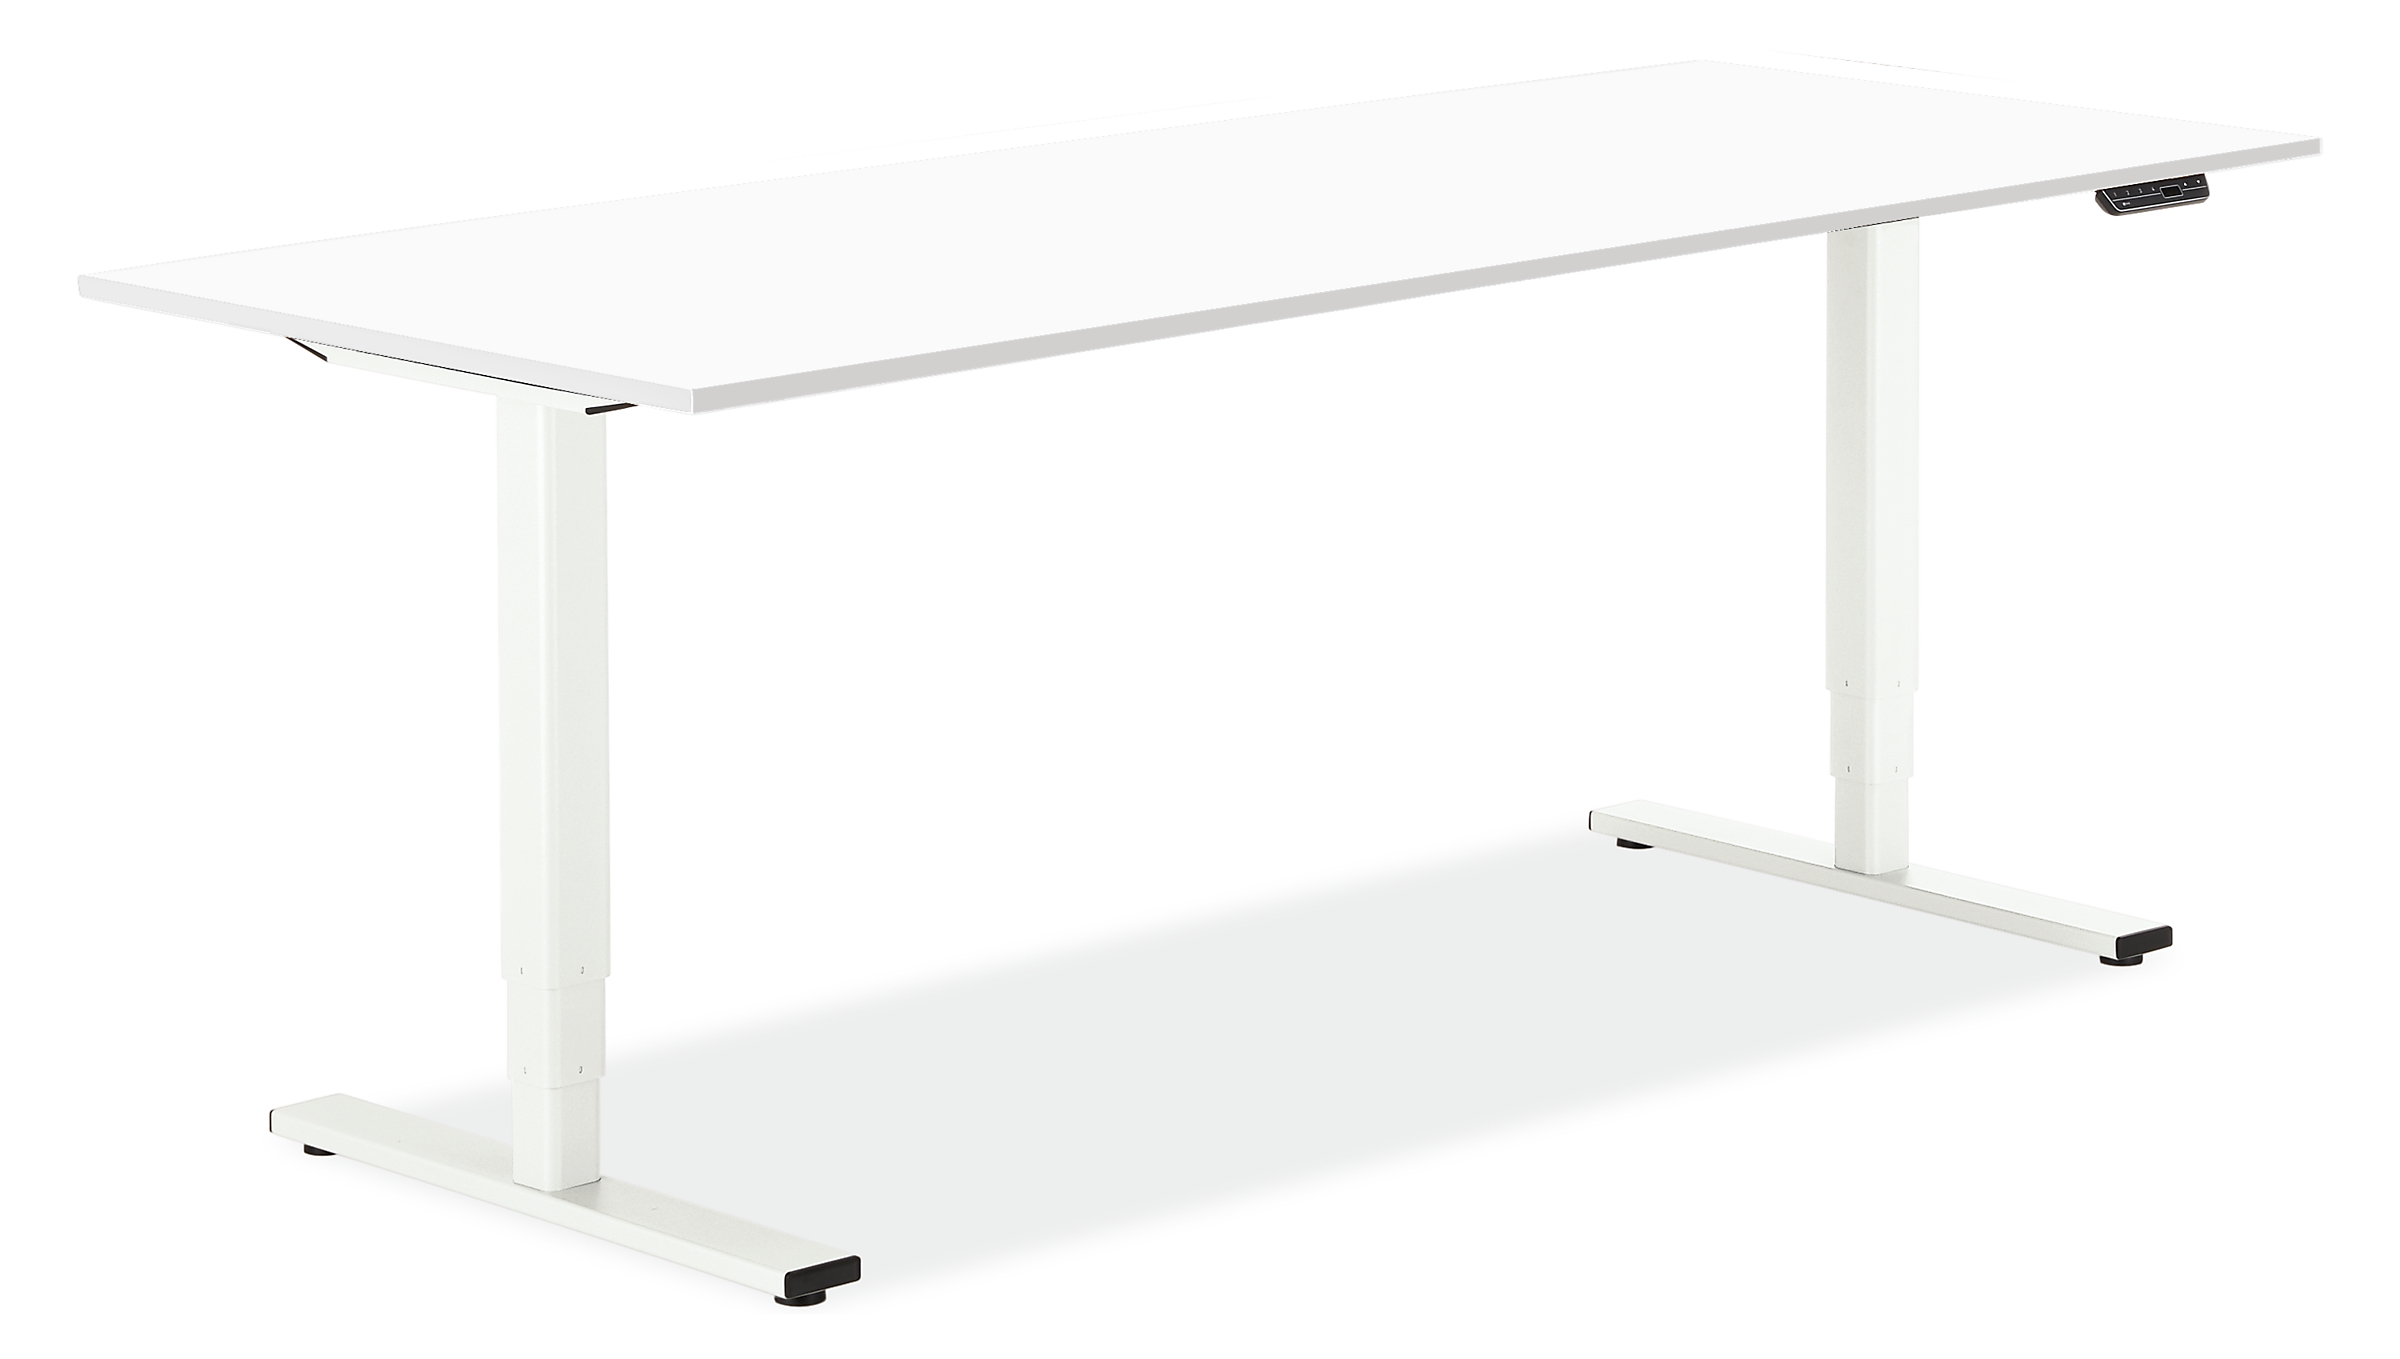 Aedric 72w 30d 23-49h Adjustable Standing Desk